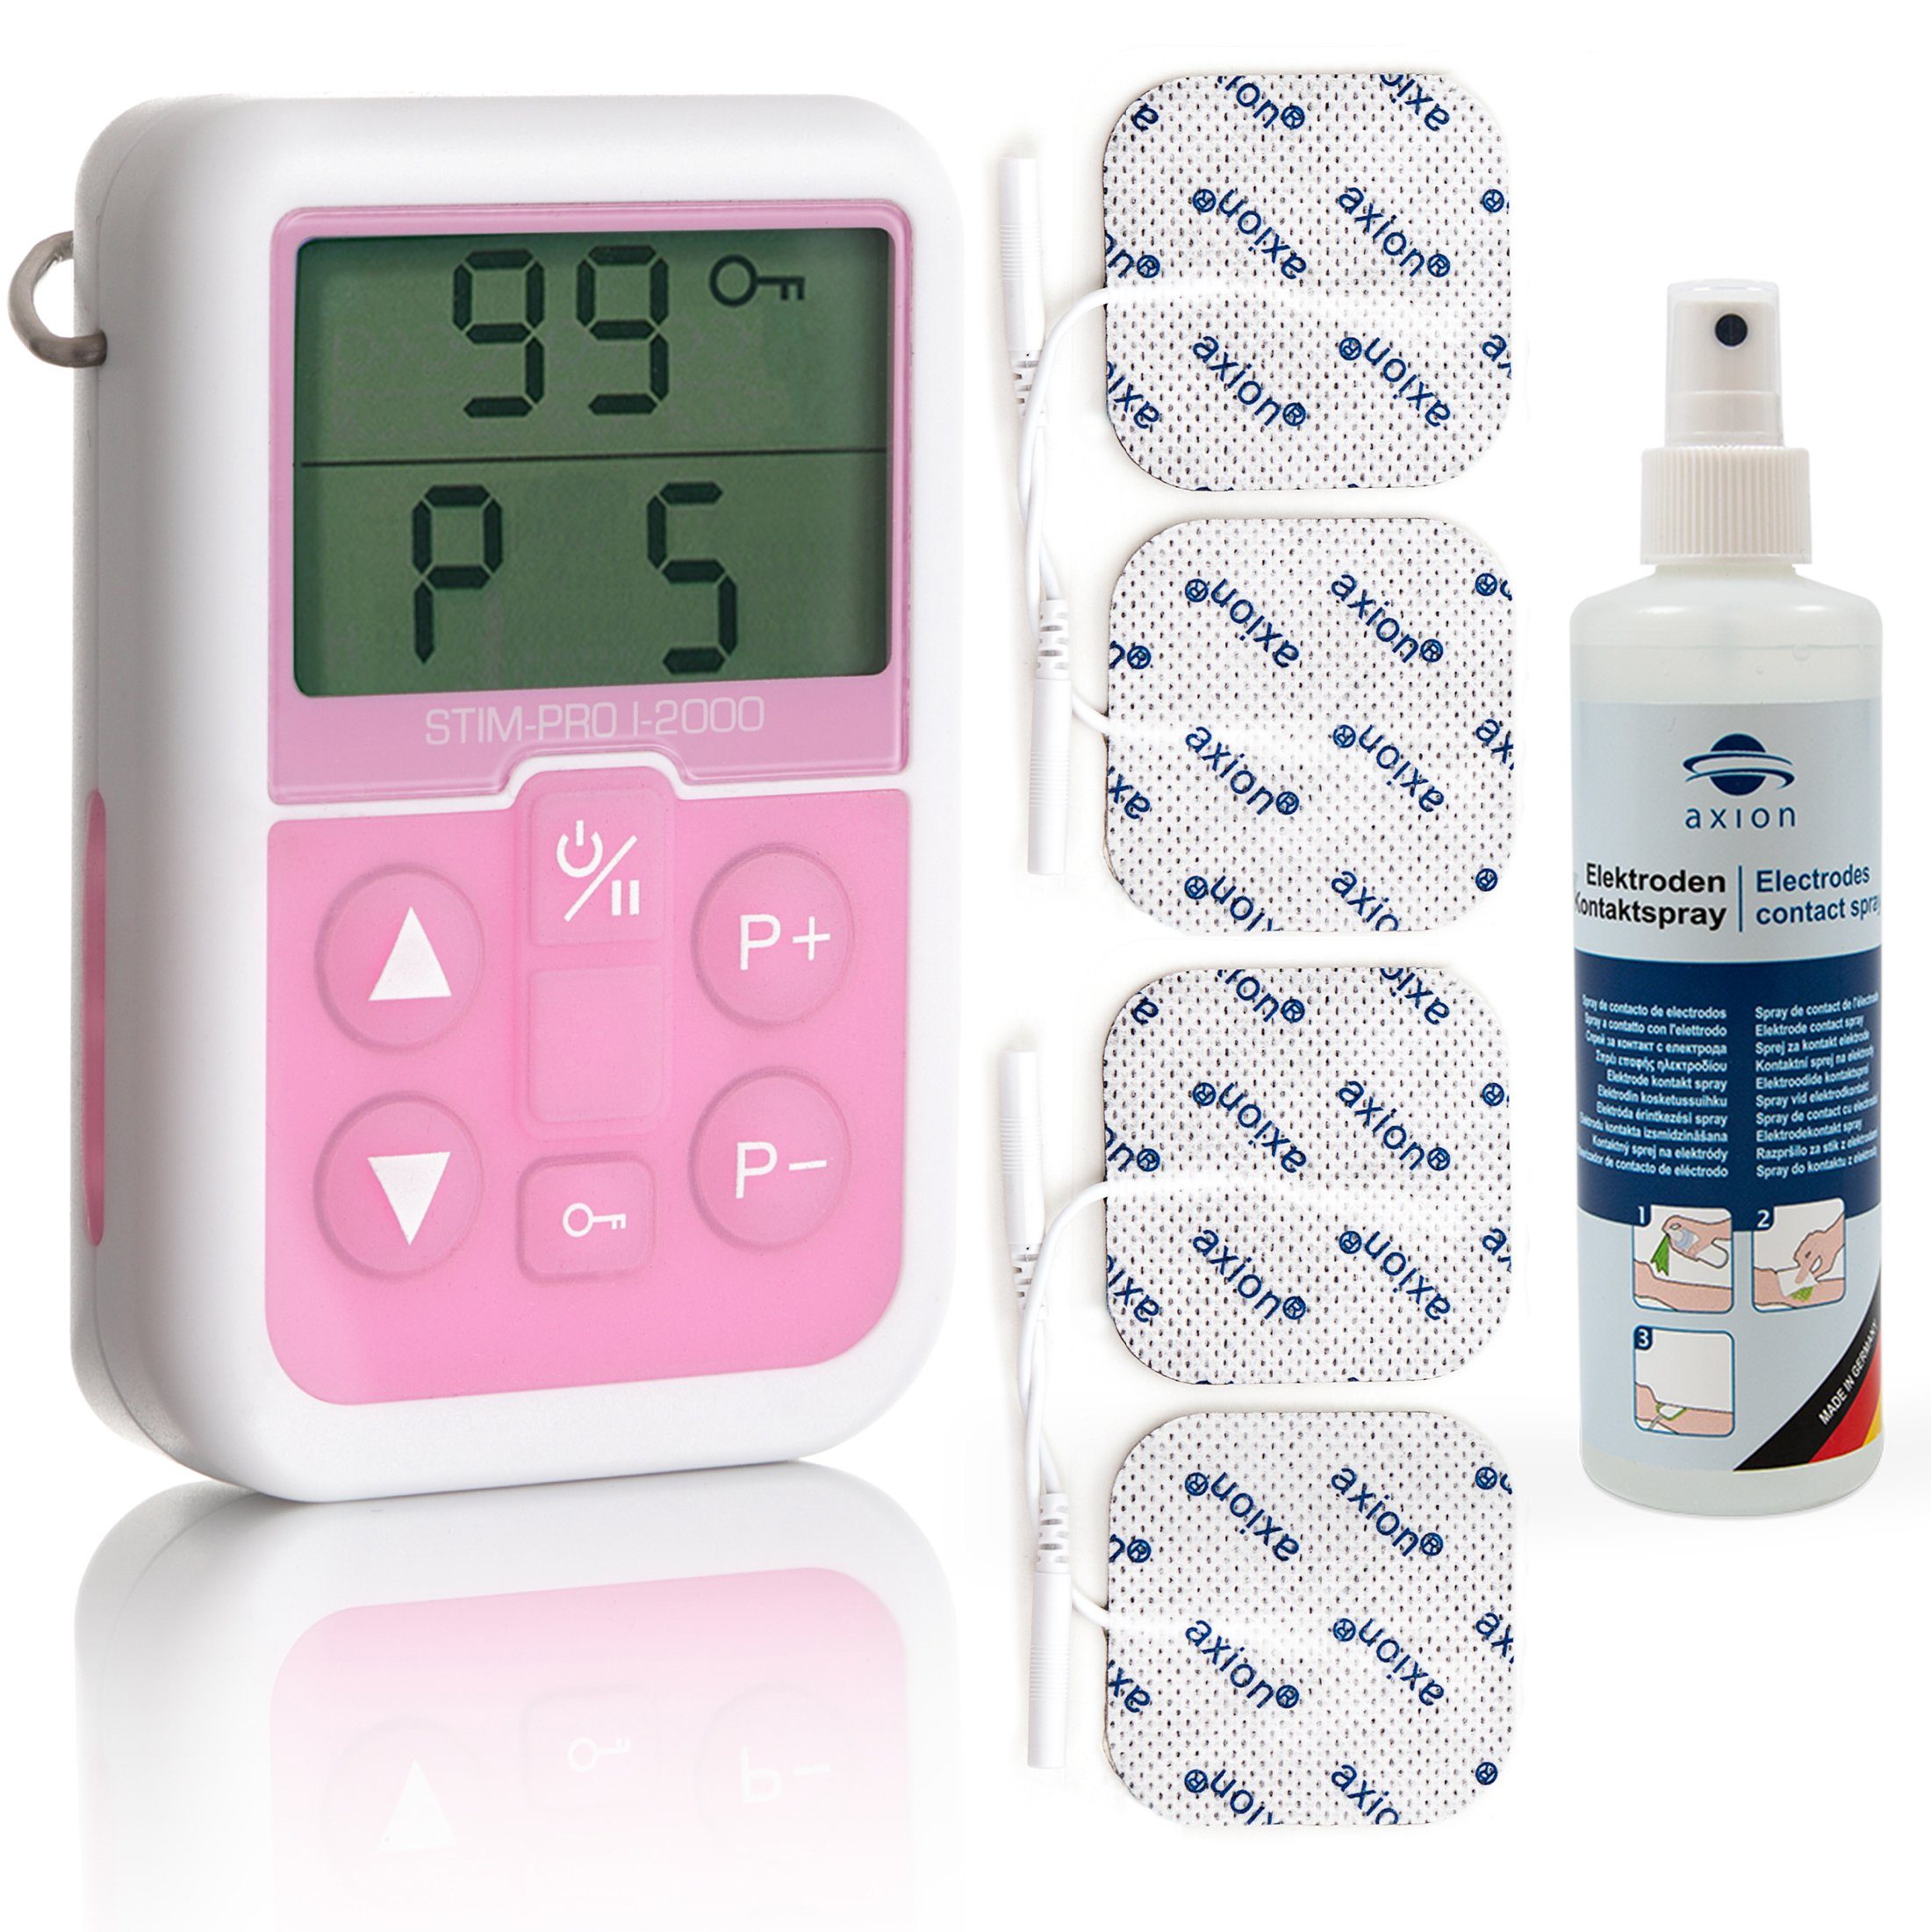 für Inkontinenz 2a I-2000 Geburtsrückbildung, EMS Axion Gerät oder Beckenboden-Elektrostimulationsgerät der Medizinprodukt Klasse